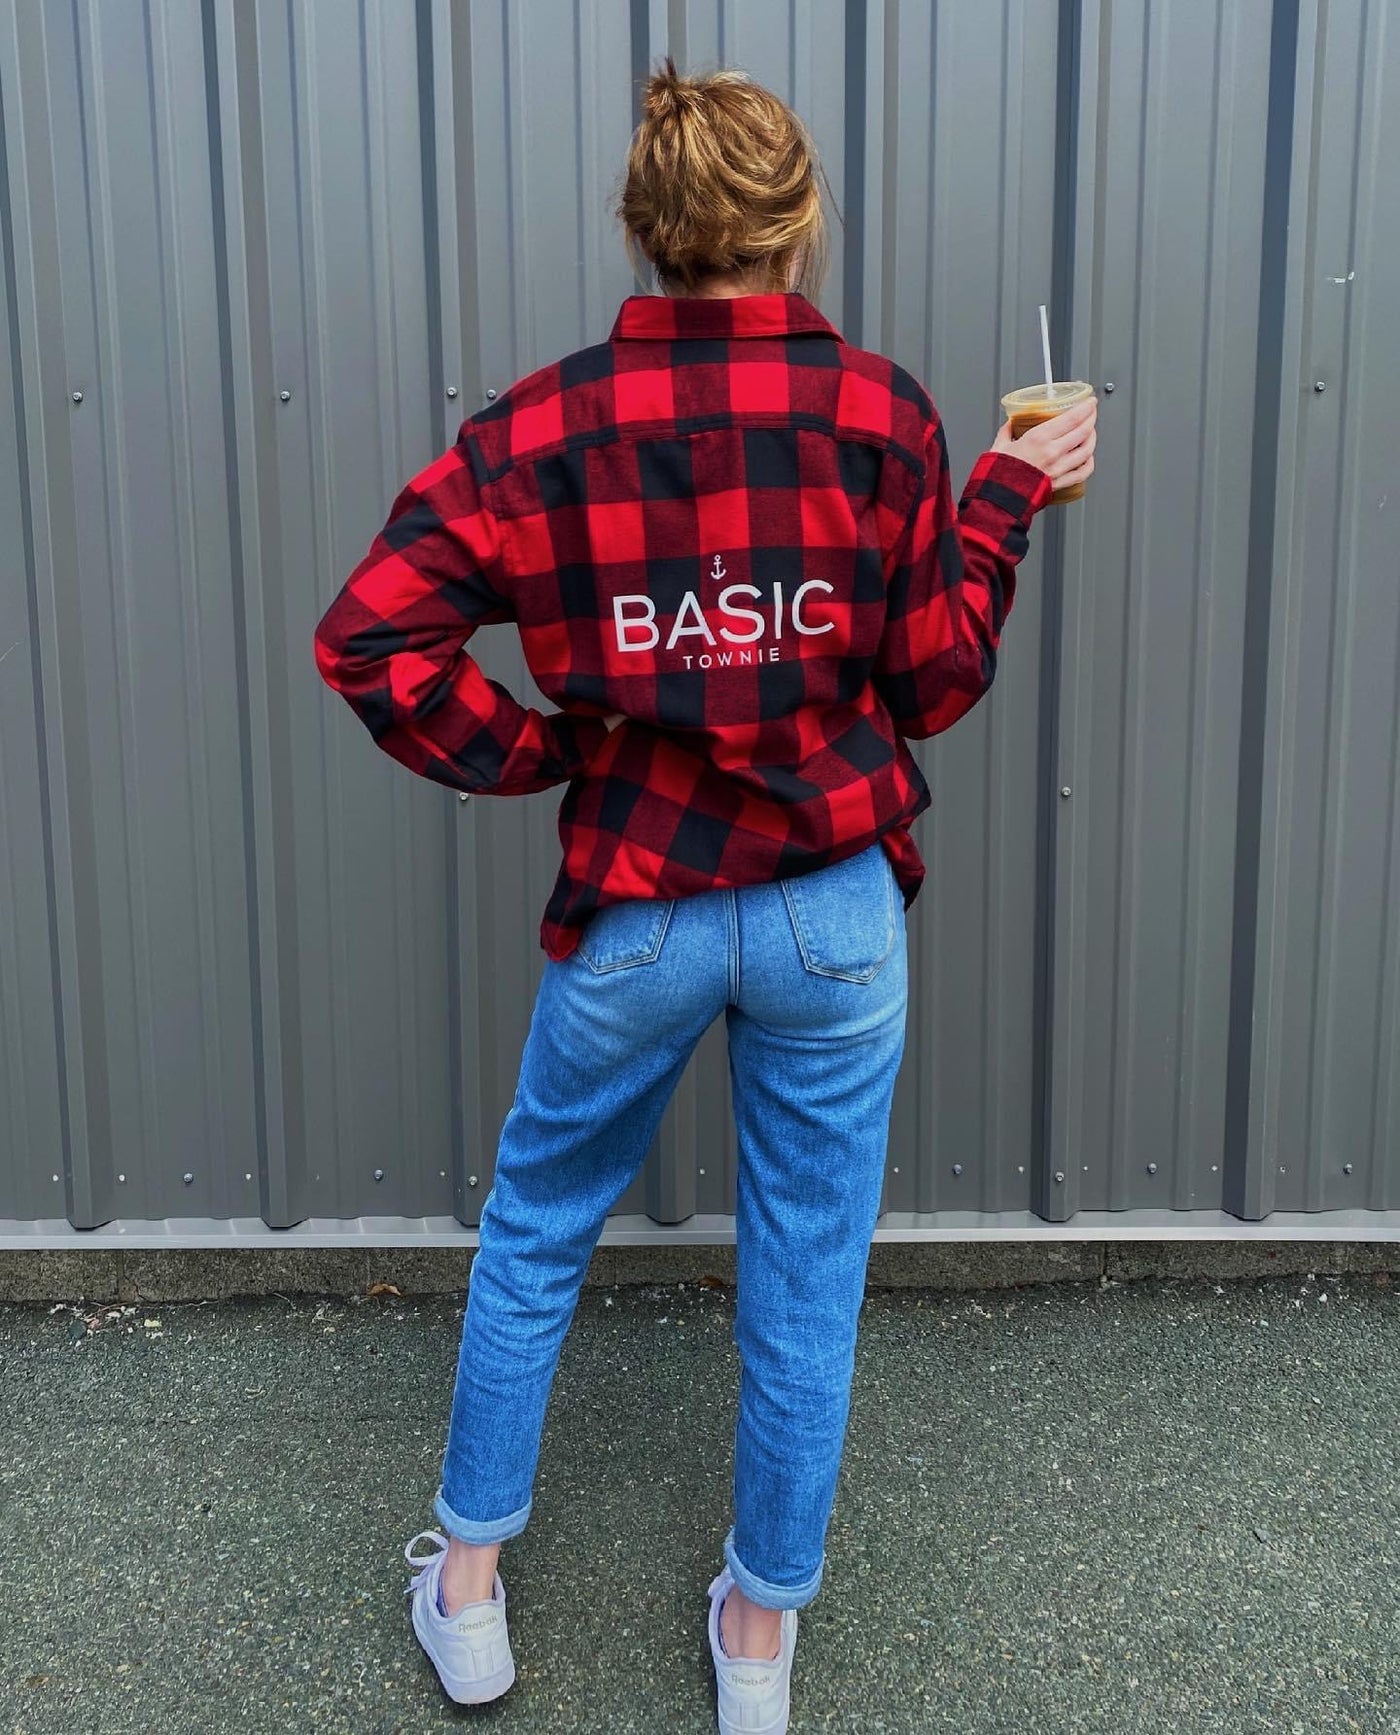 "Basic Townie" Unisex Plaid Flannel Shirt